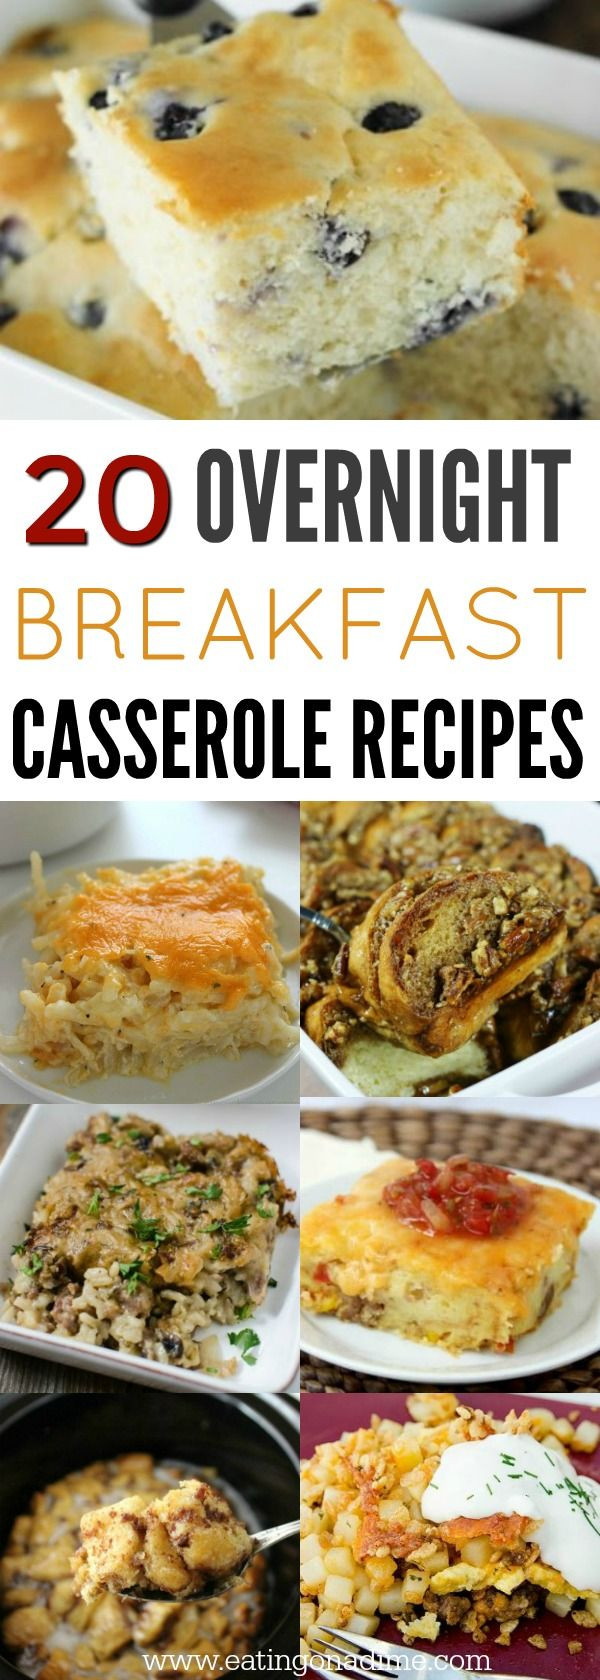 Overnight Breakfast Recipes
 The 25 best Make ahead breakfast casseroles ideas on